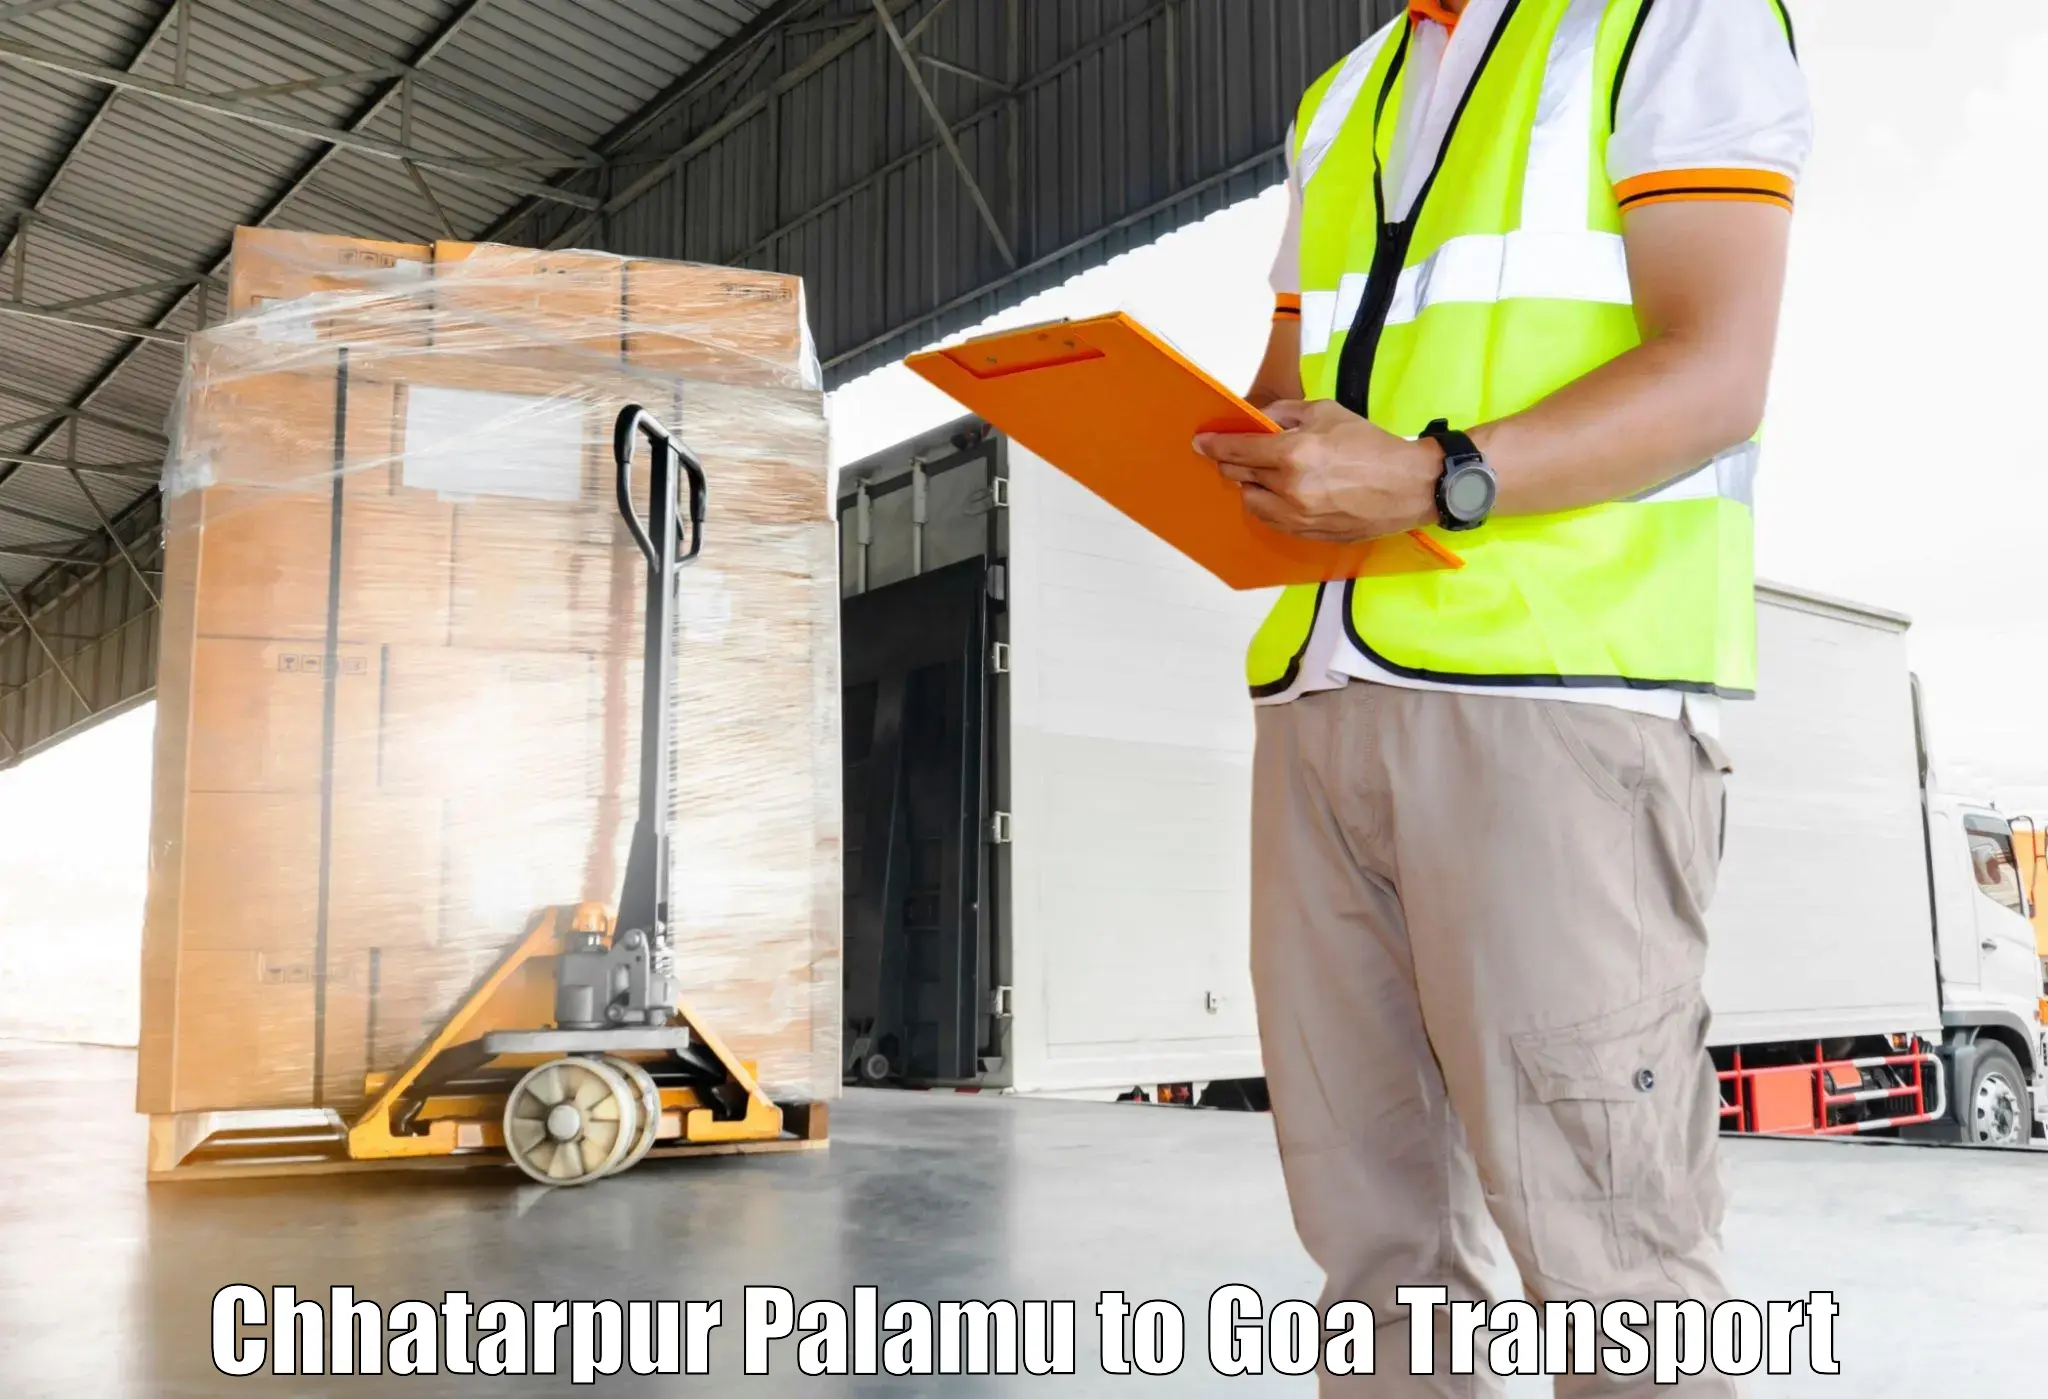 Cargo train transport services in Chhatarpur Palamu to Mormugao Port